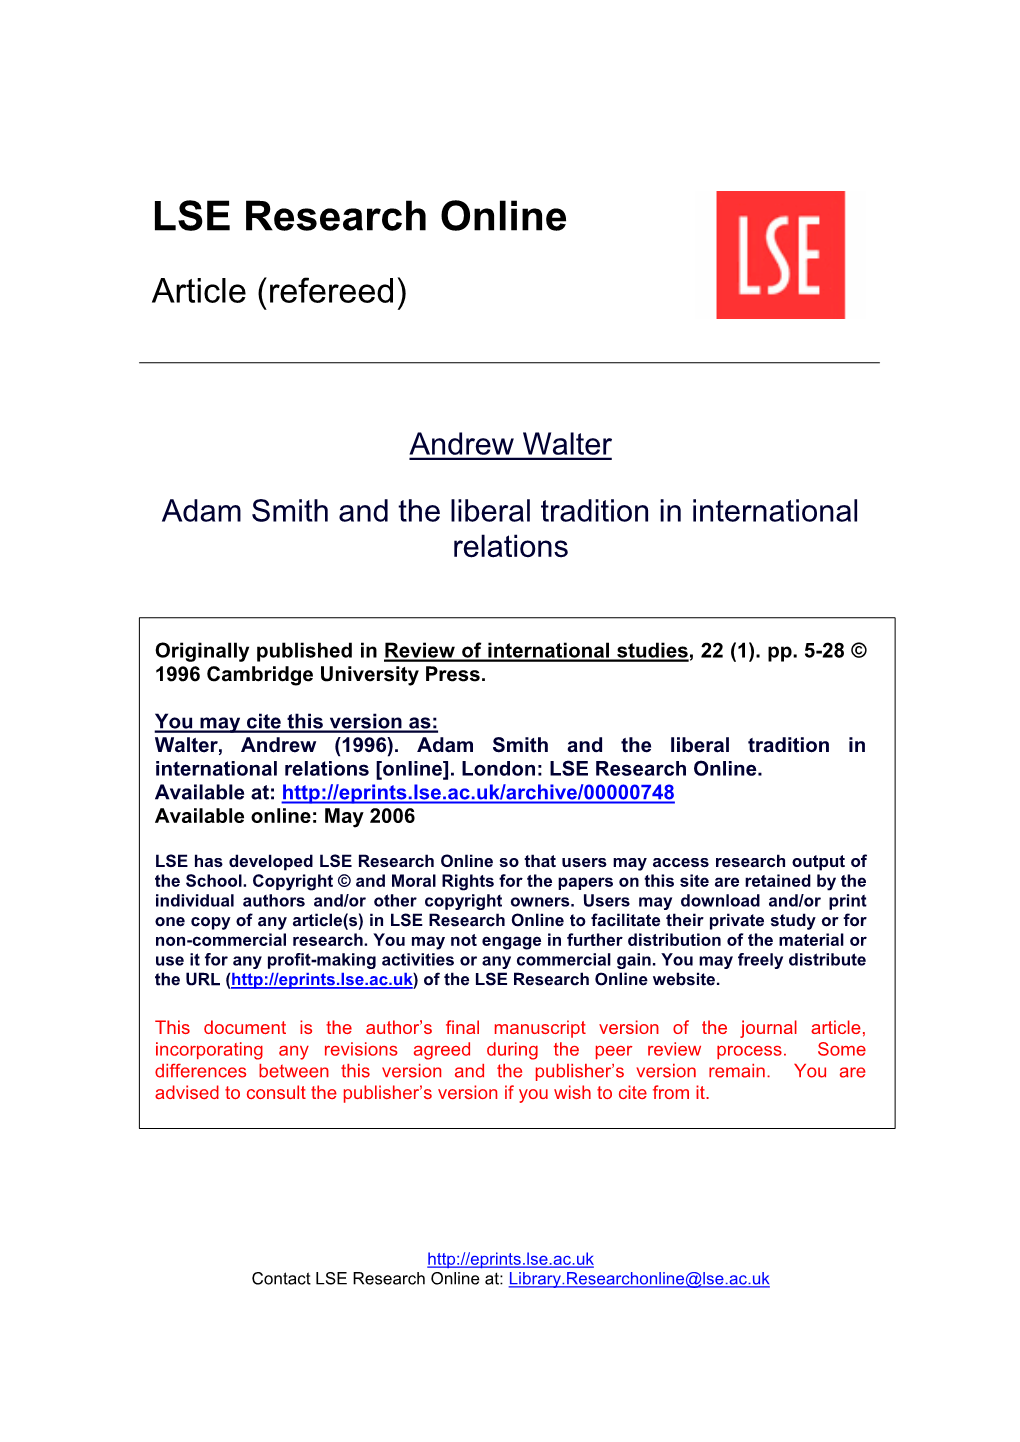 Adam Smith on International Relations